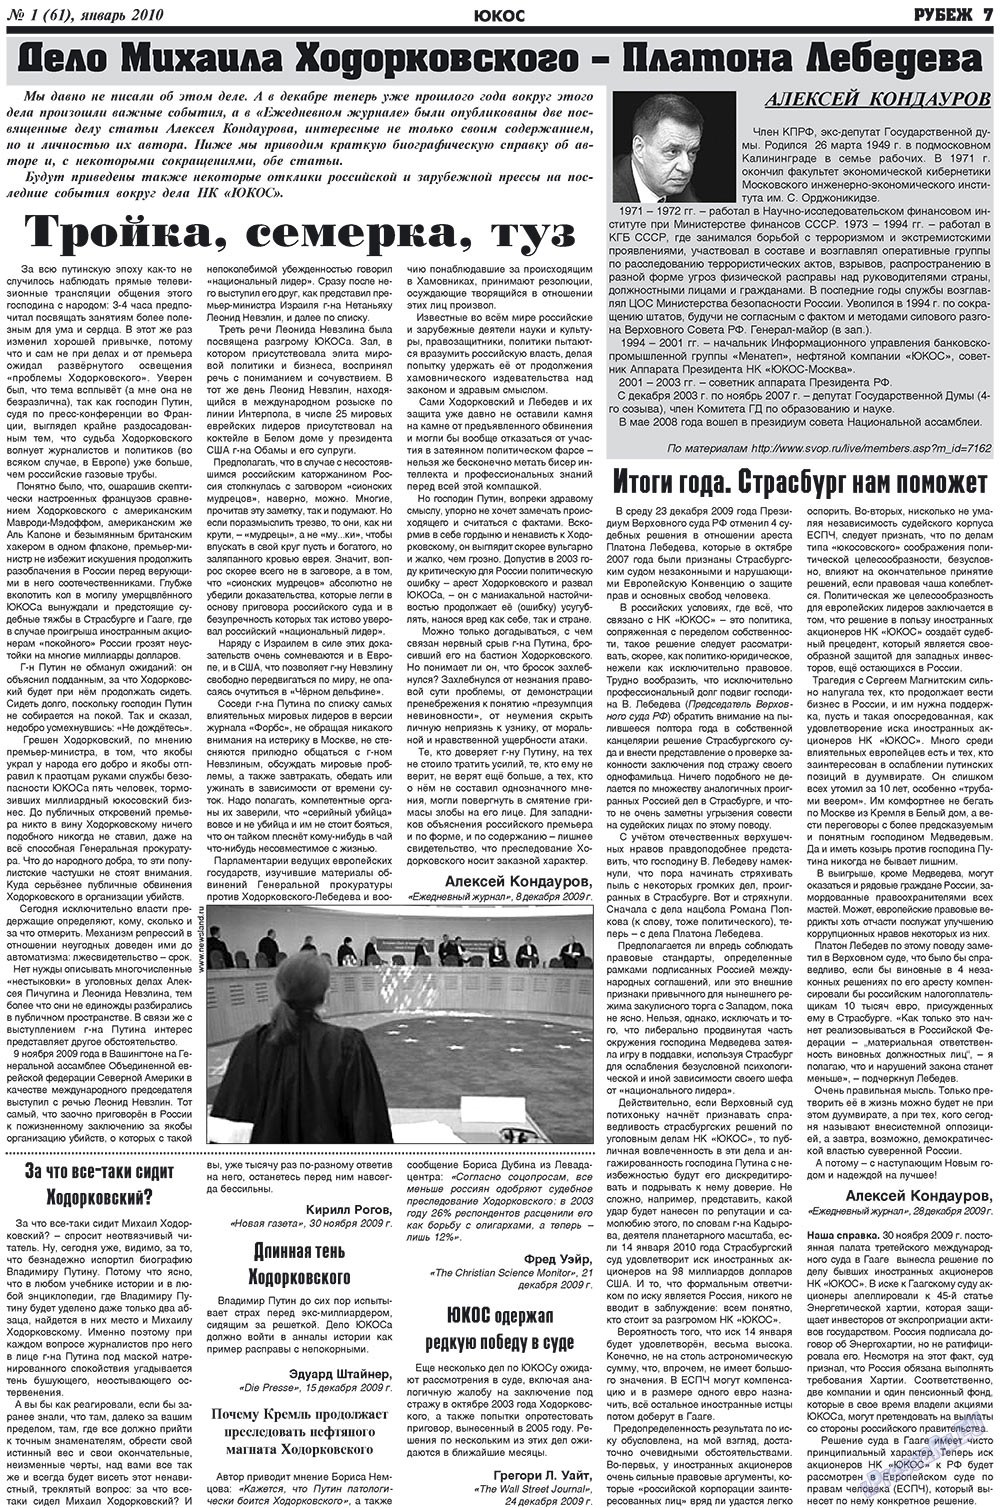 Рубеж, газета. 2010 №1 стр.7